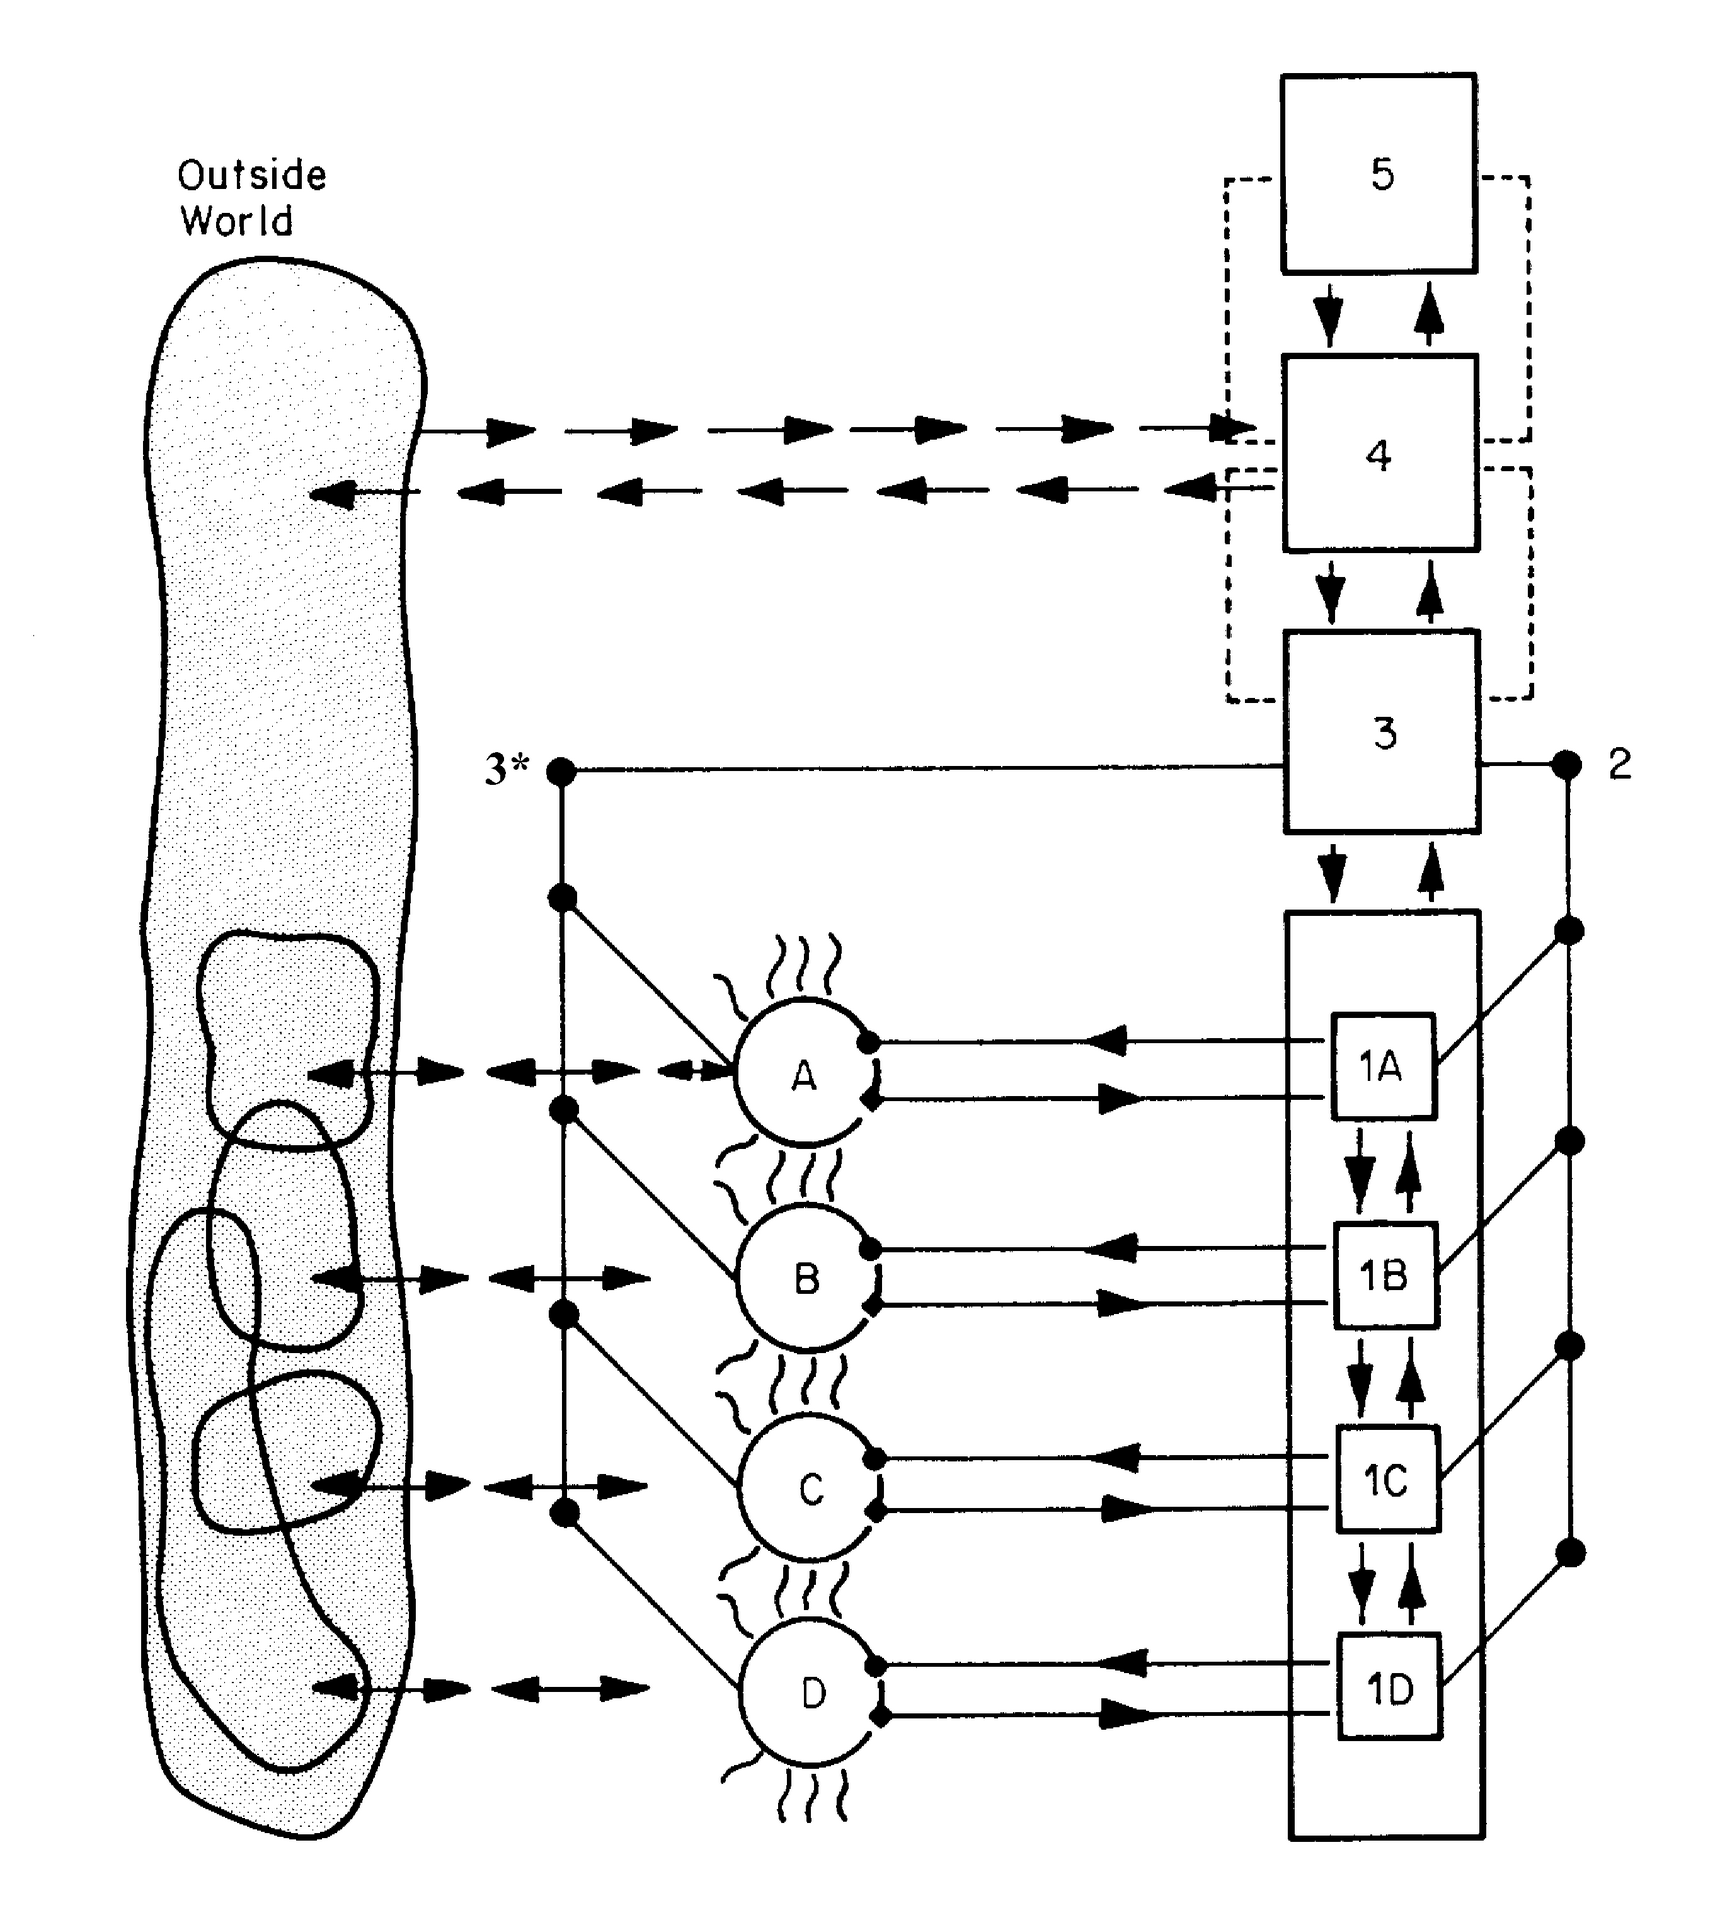 a viable system model diagram